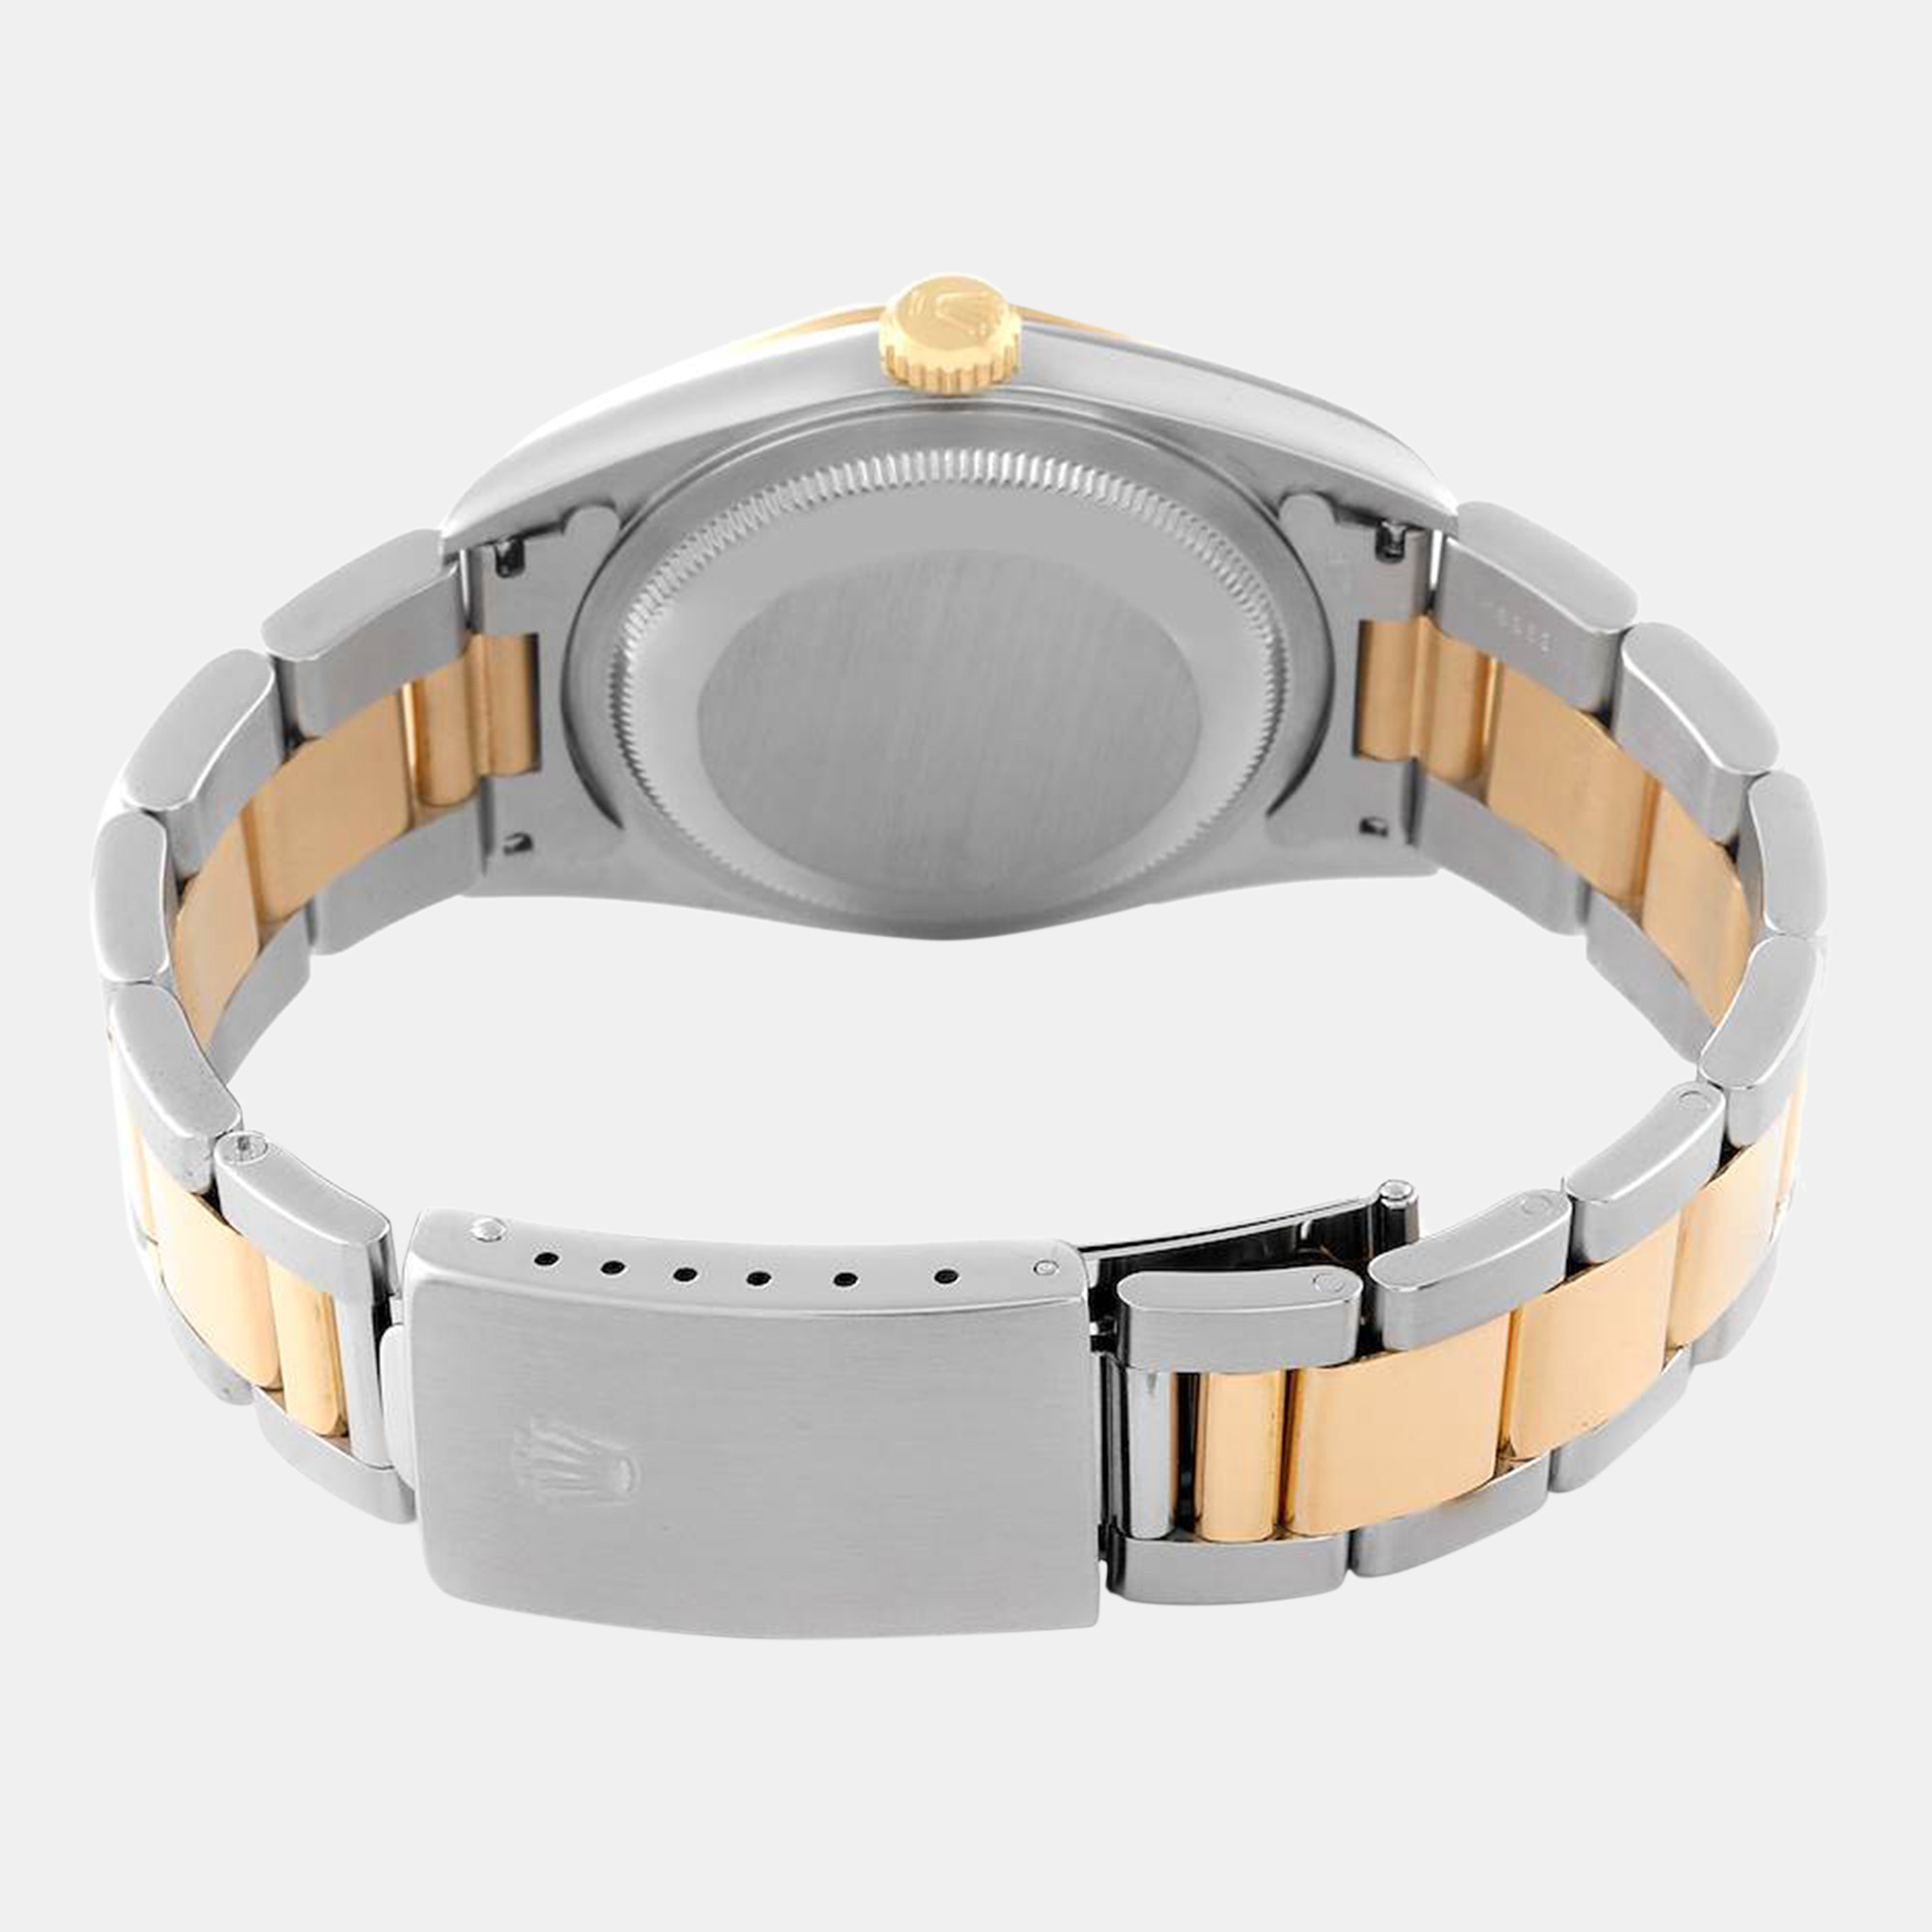 Rolex Datejust Steel Yellow Gold White Dial Men's Watch 16203 36 Mm